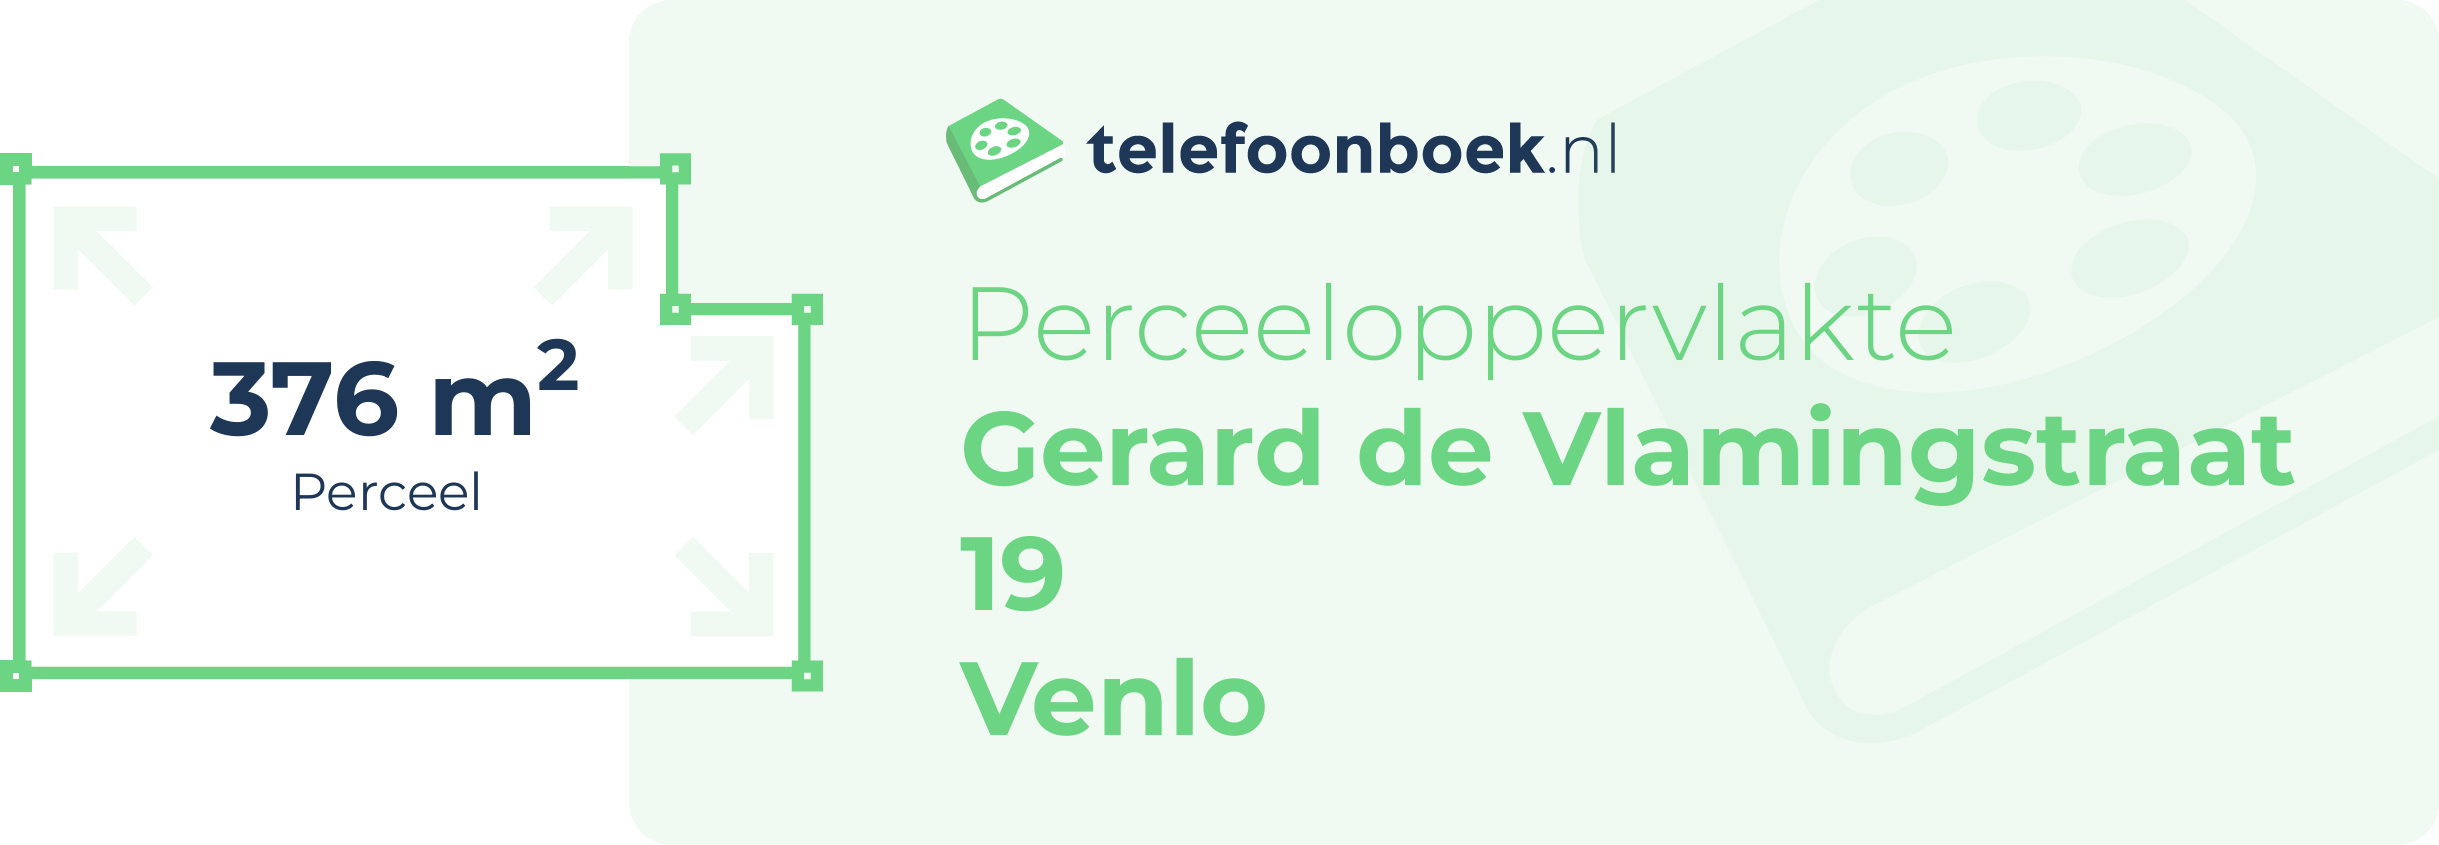 Perceeloppervlakte Gerard De Vlamingstraat 19 Venlo